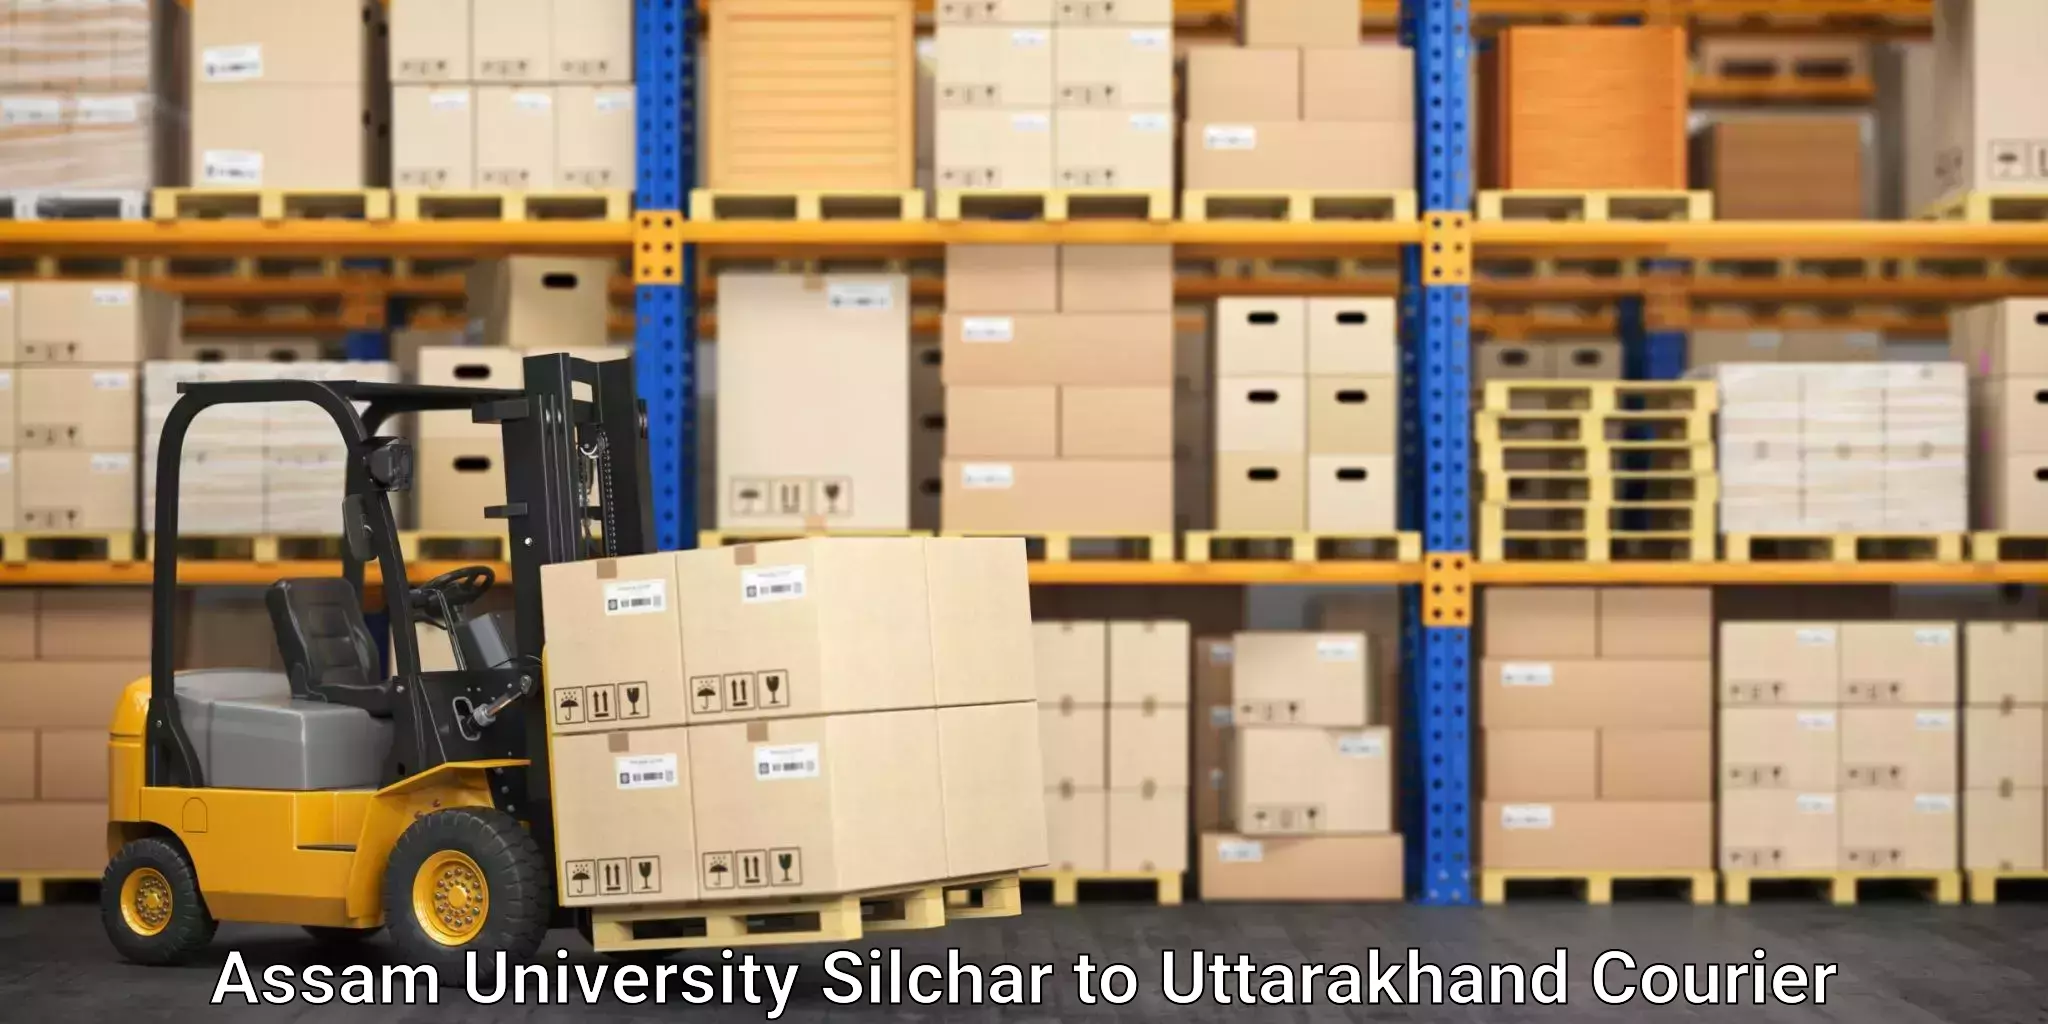 24/7 courier service Assam University Silchar to Srinagar Pauri Garhwal